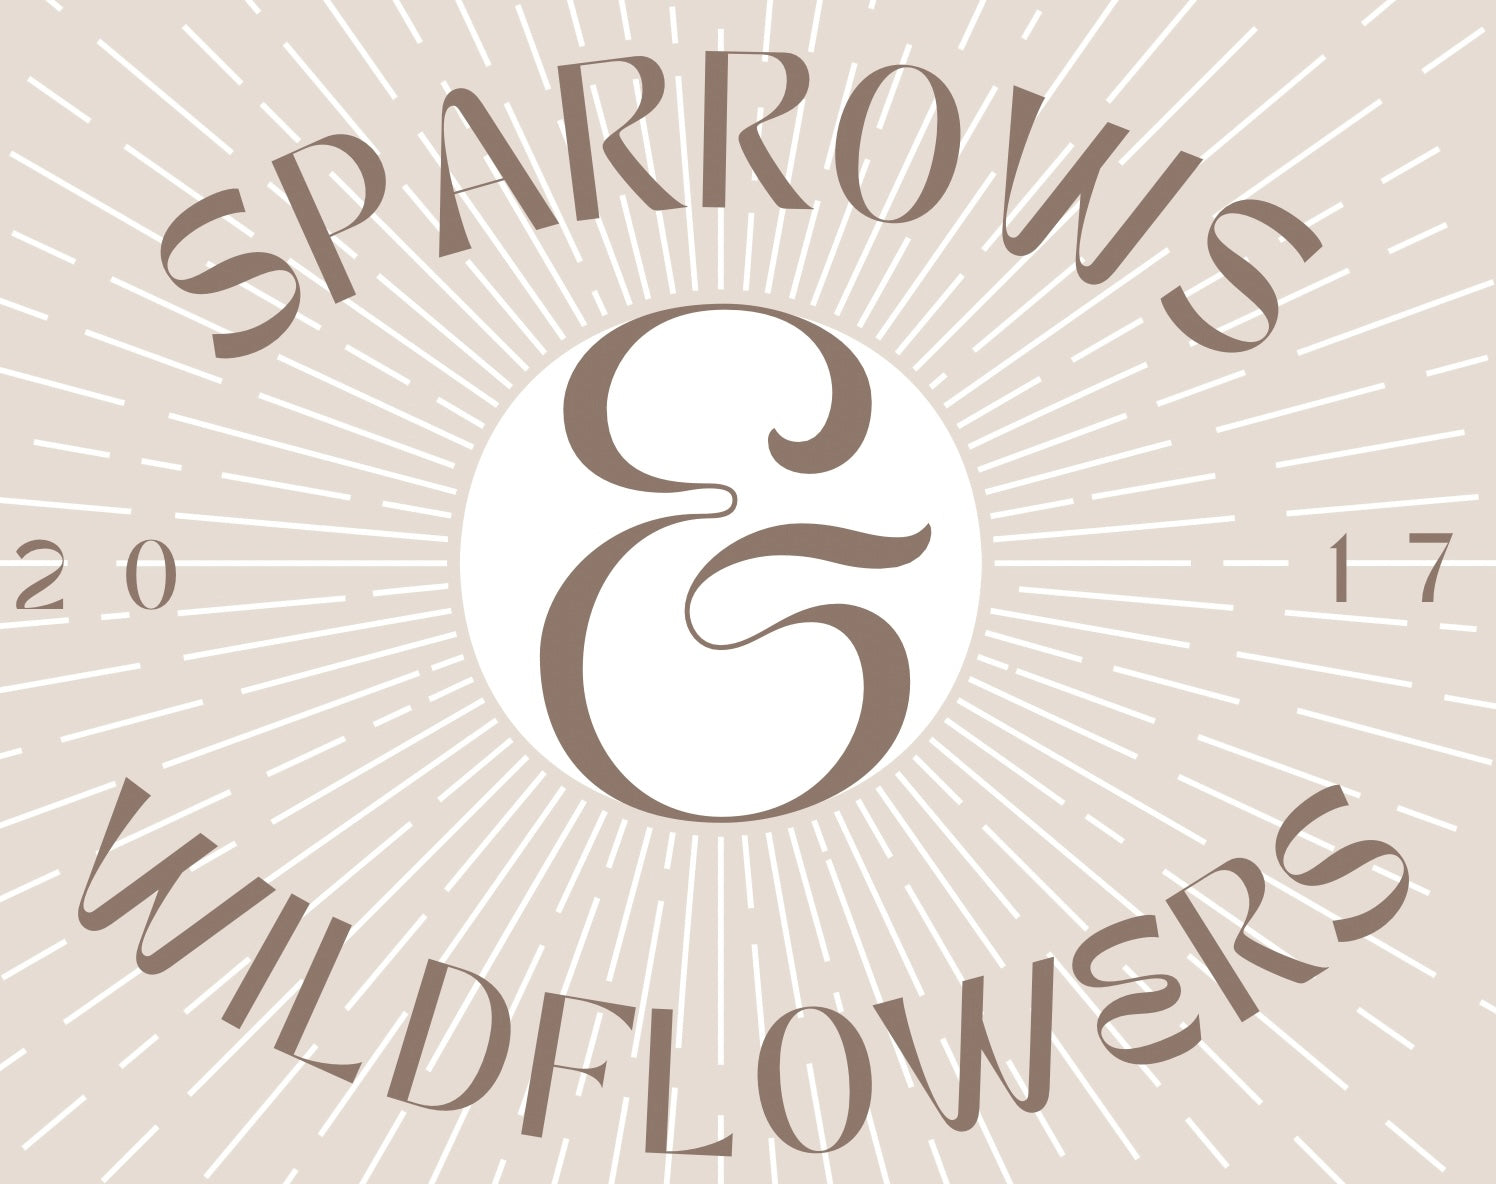 Sparrows & Wildflowers